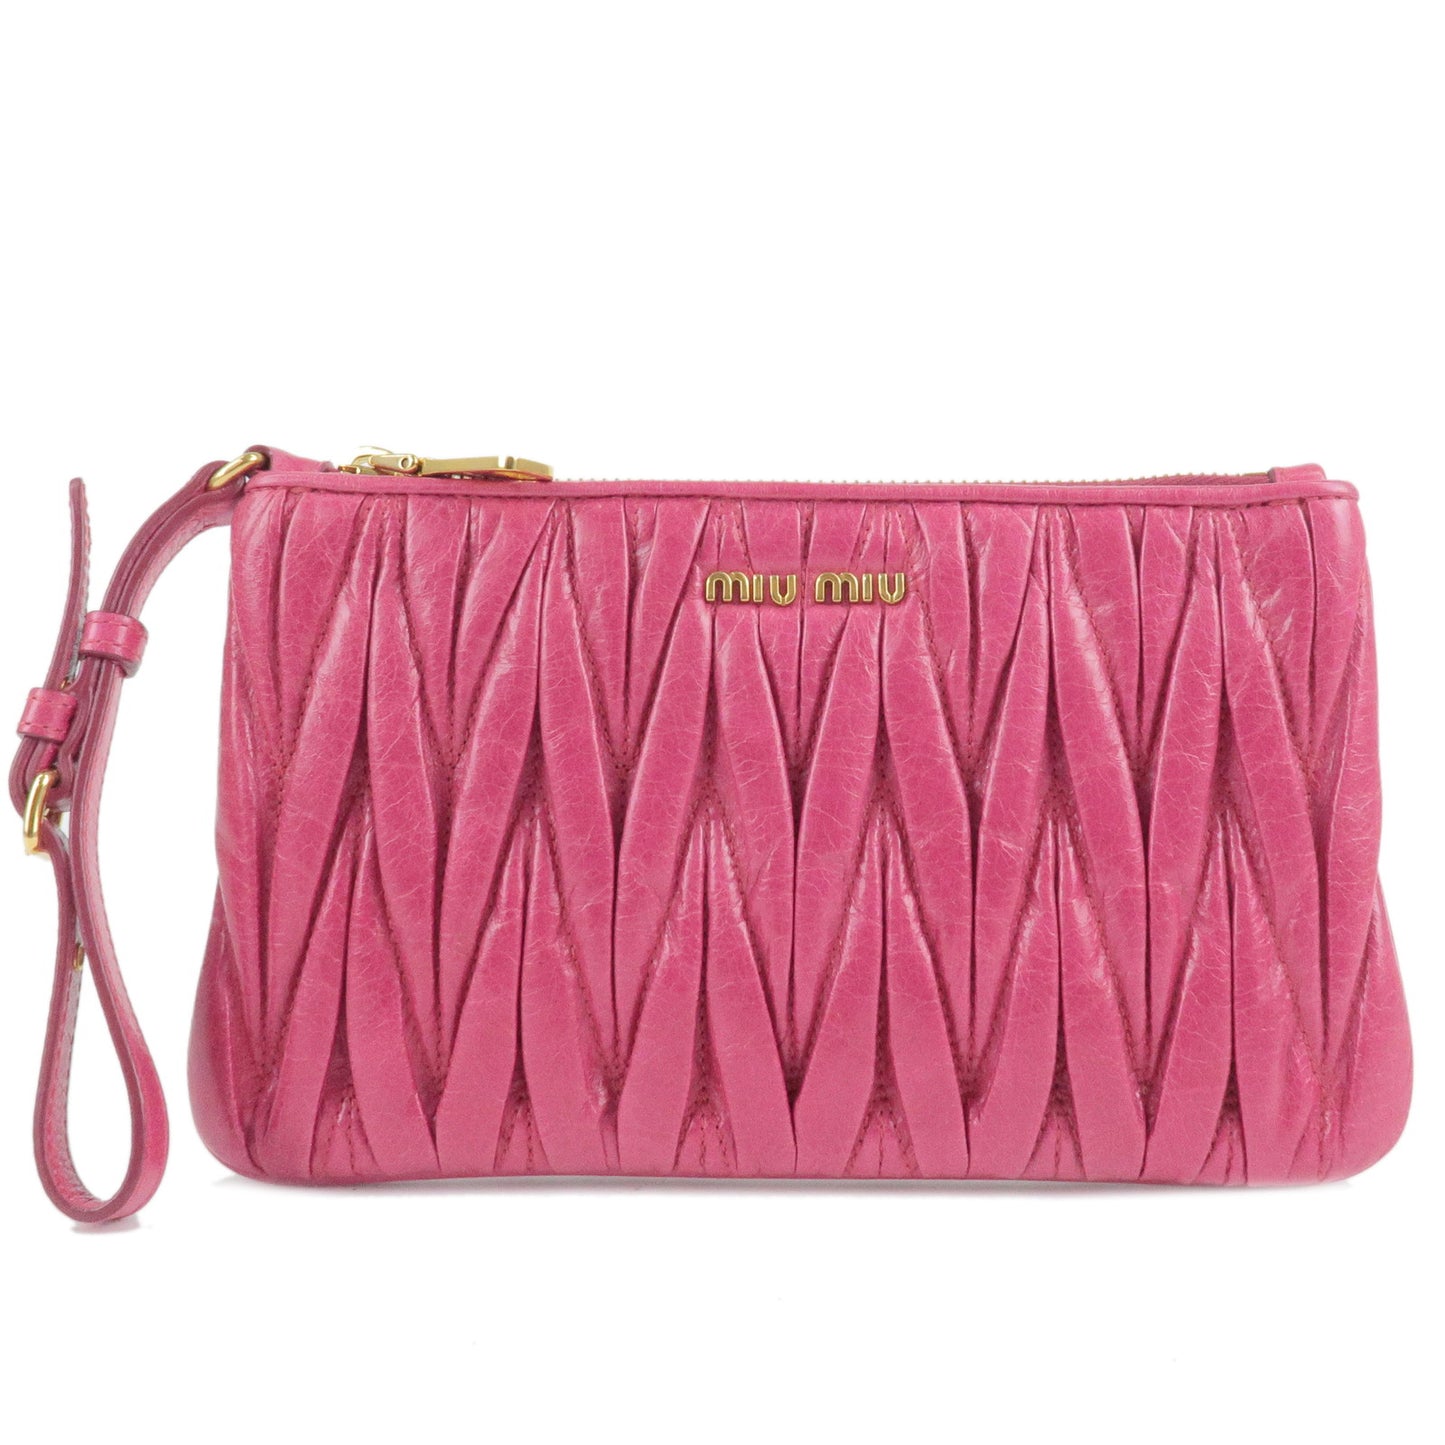 MIU-MIU-Matellase-Leather-Pouch-Wristlet-Clutch-Bag-Pink